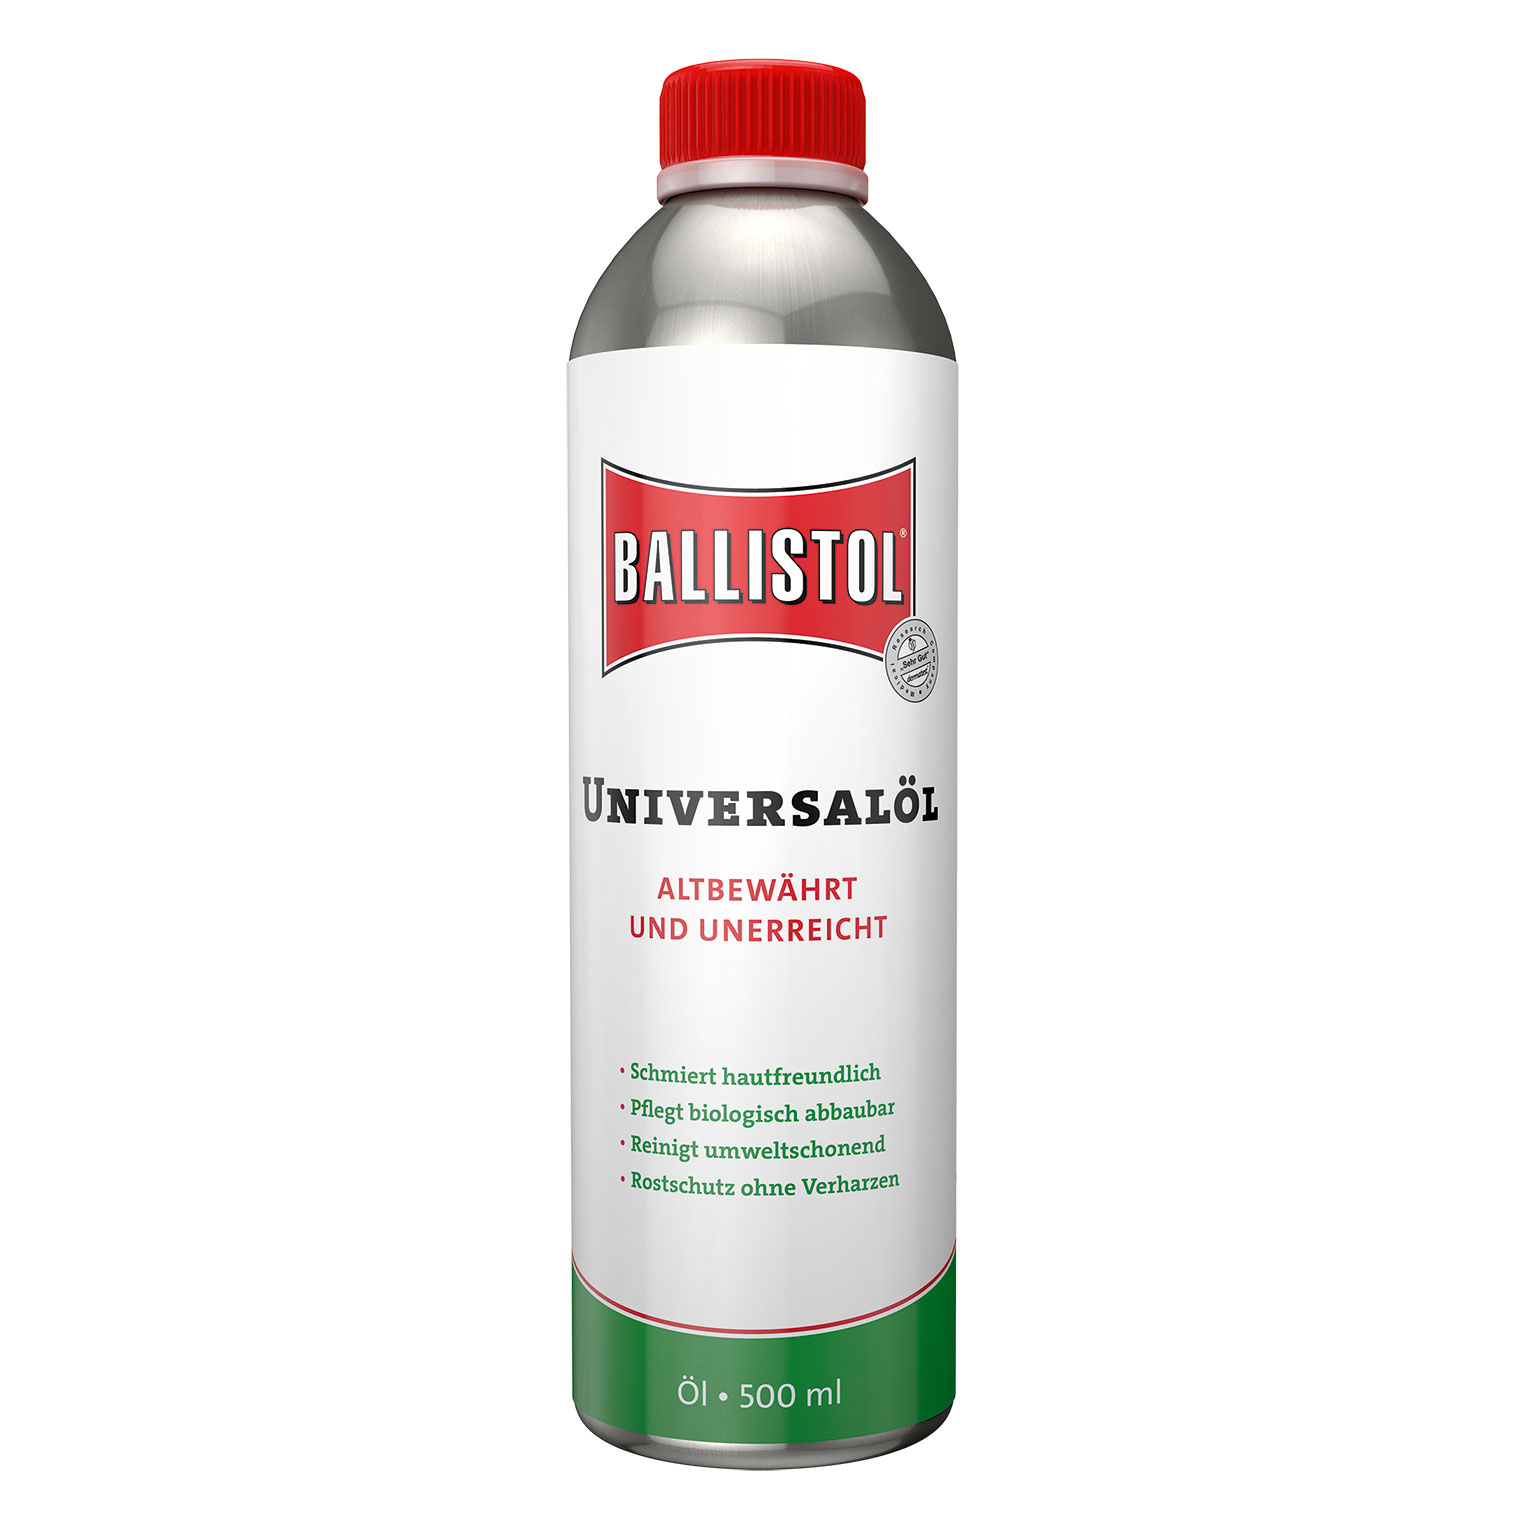 BALLISTOL Universal Oil Liquid 500ml 21150 (Actual safety data